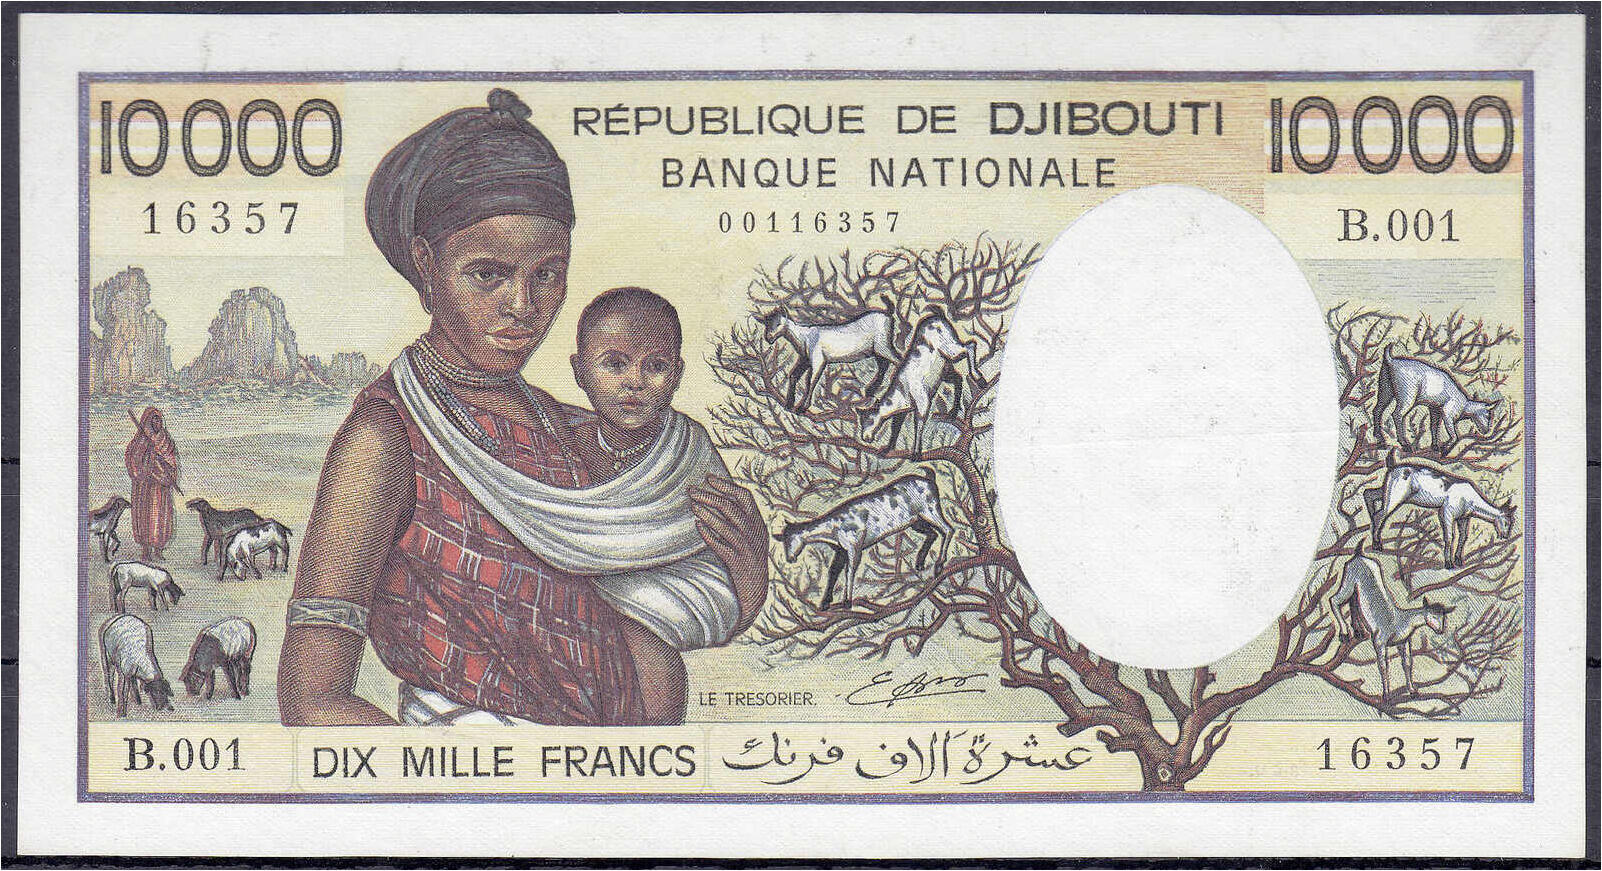 DJIBOUTI 40 Francs Banknote World Paper Money Currency Pick p46 Commemorative